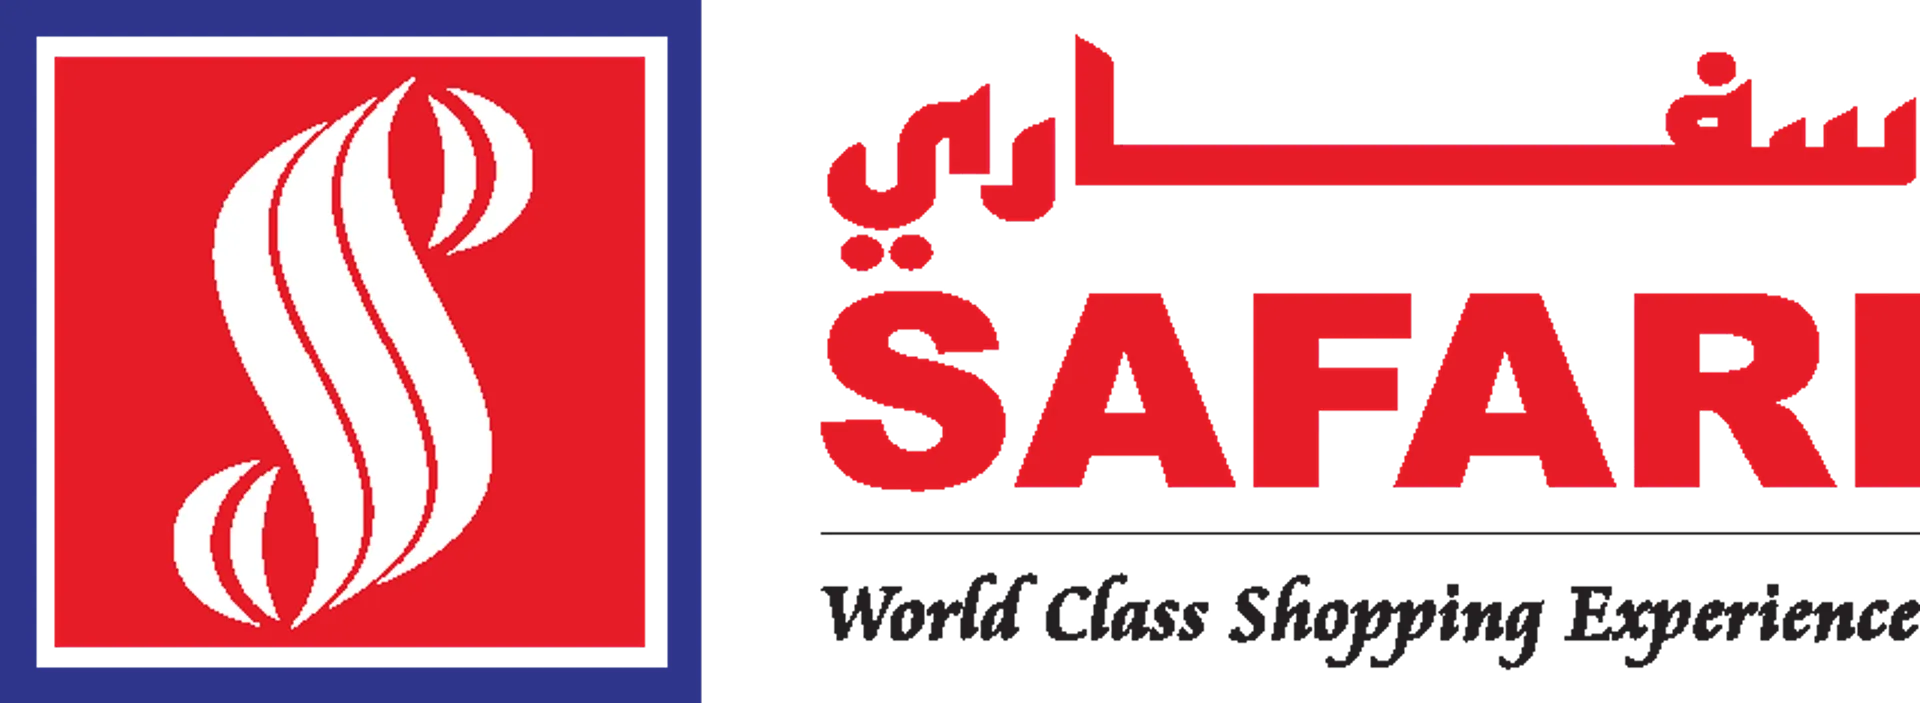 SAFARI HYPERMARKET logo. Current weekly ad